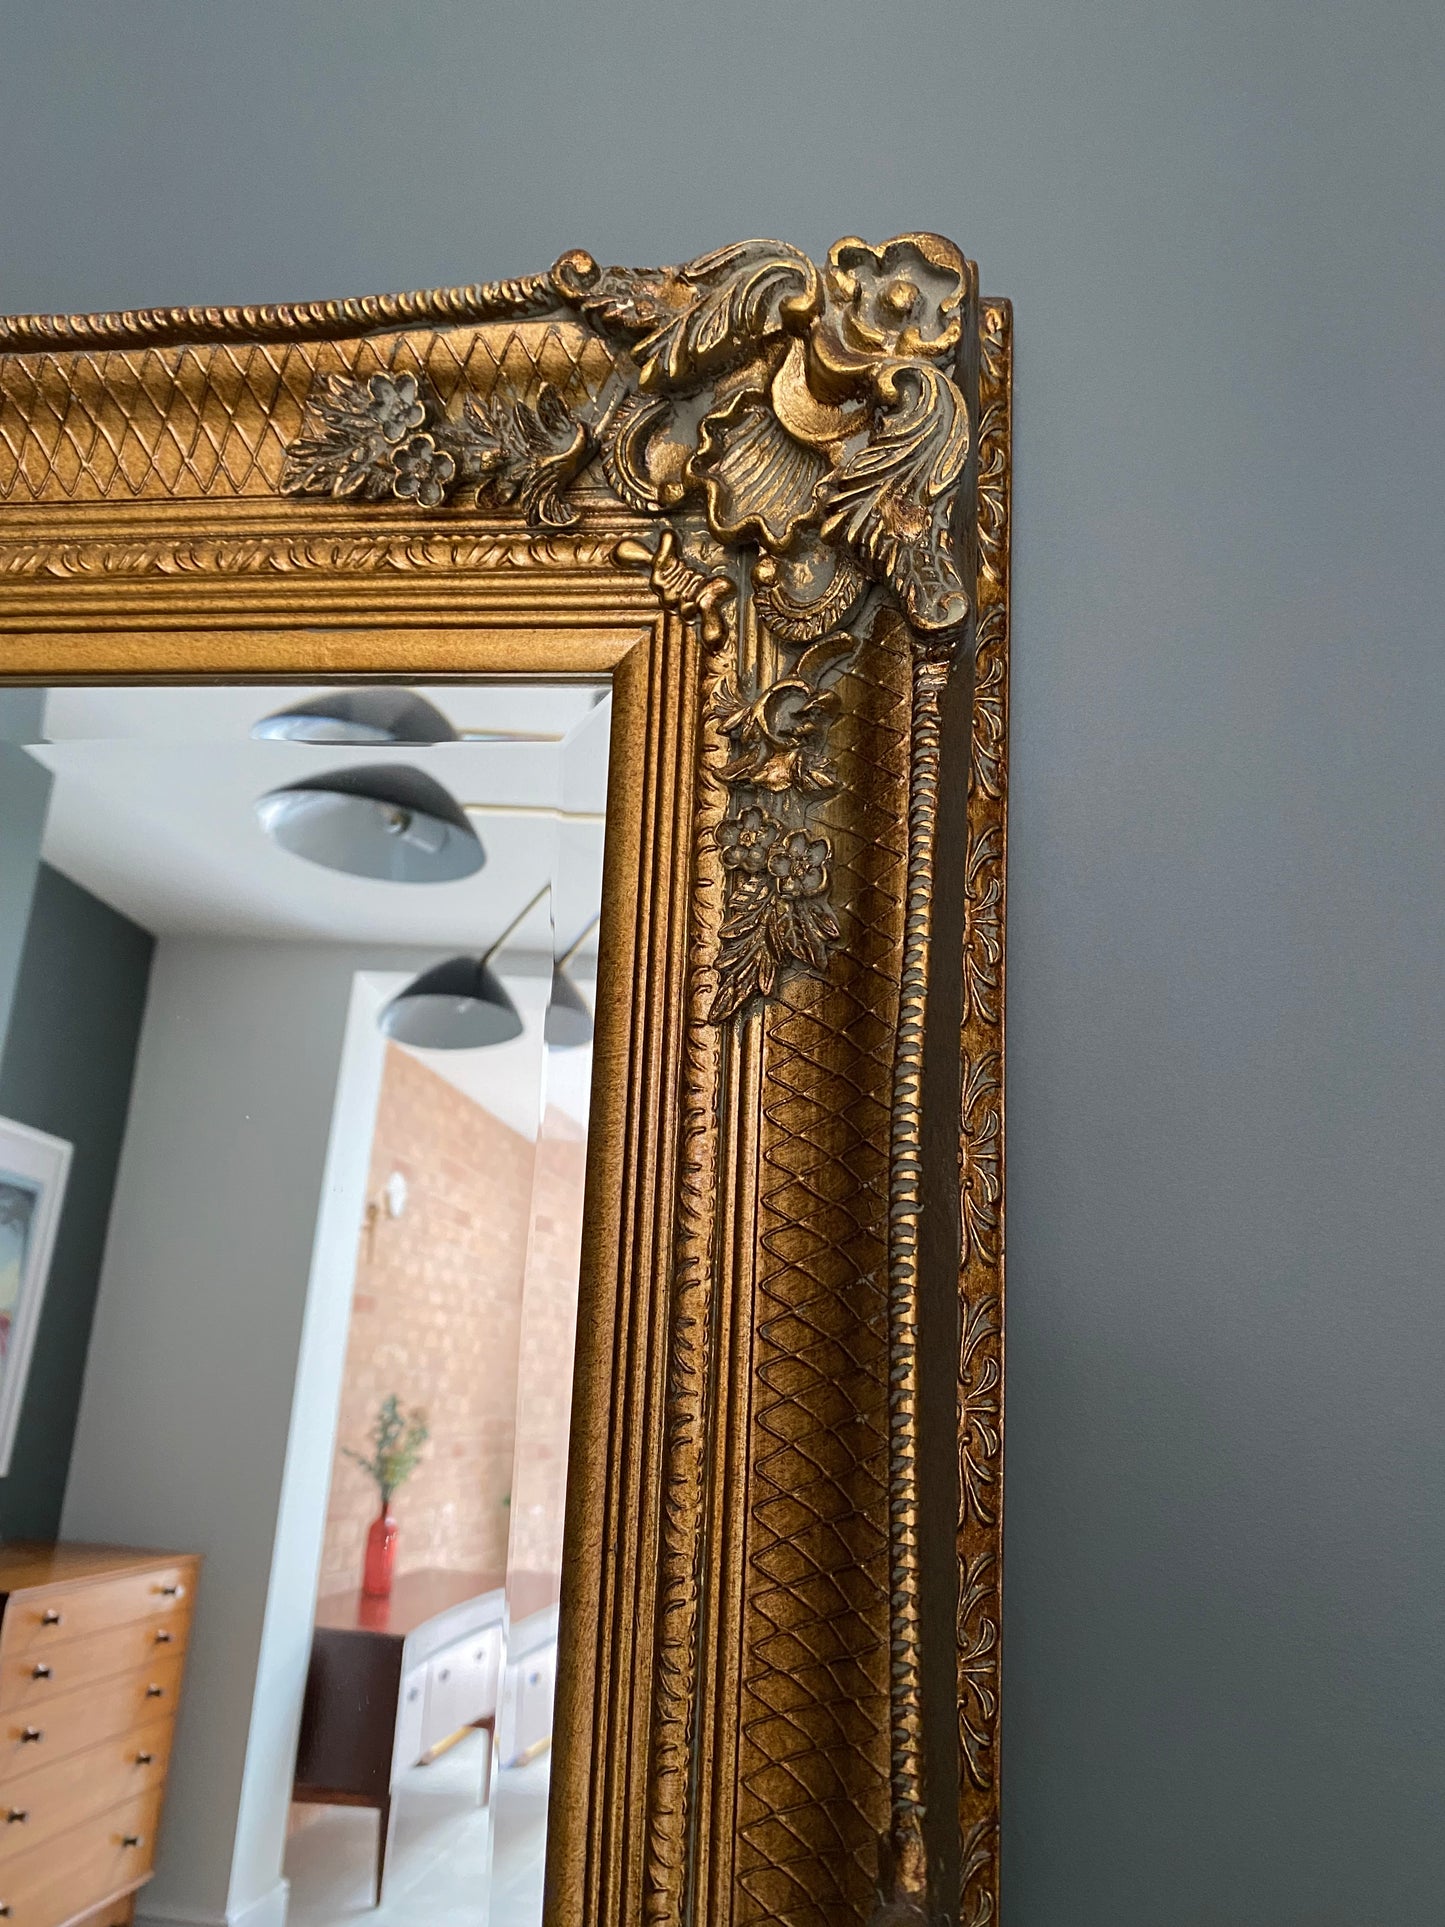 Large ornate gold portrait mirror